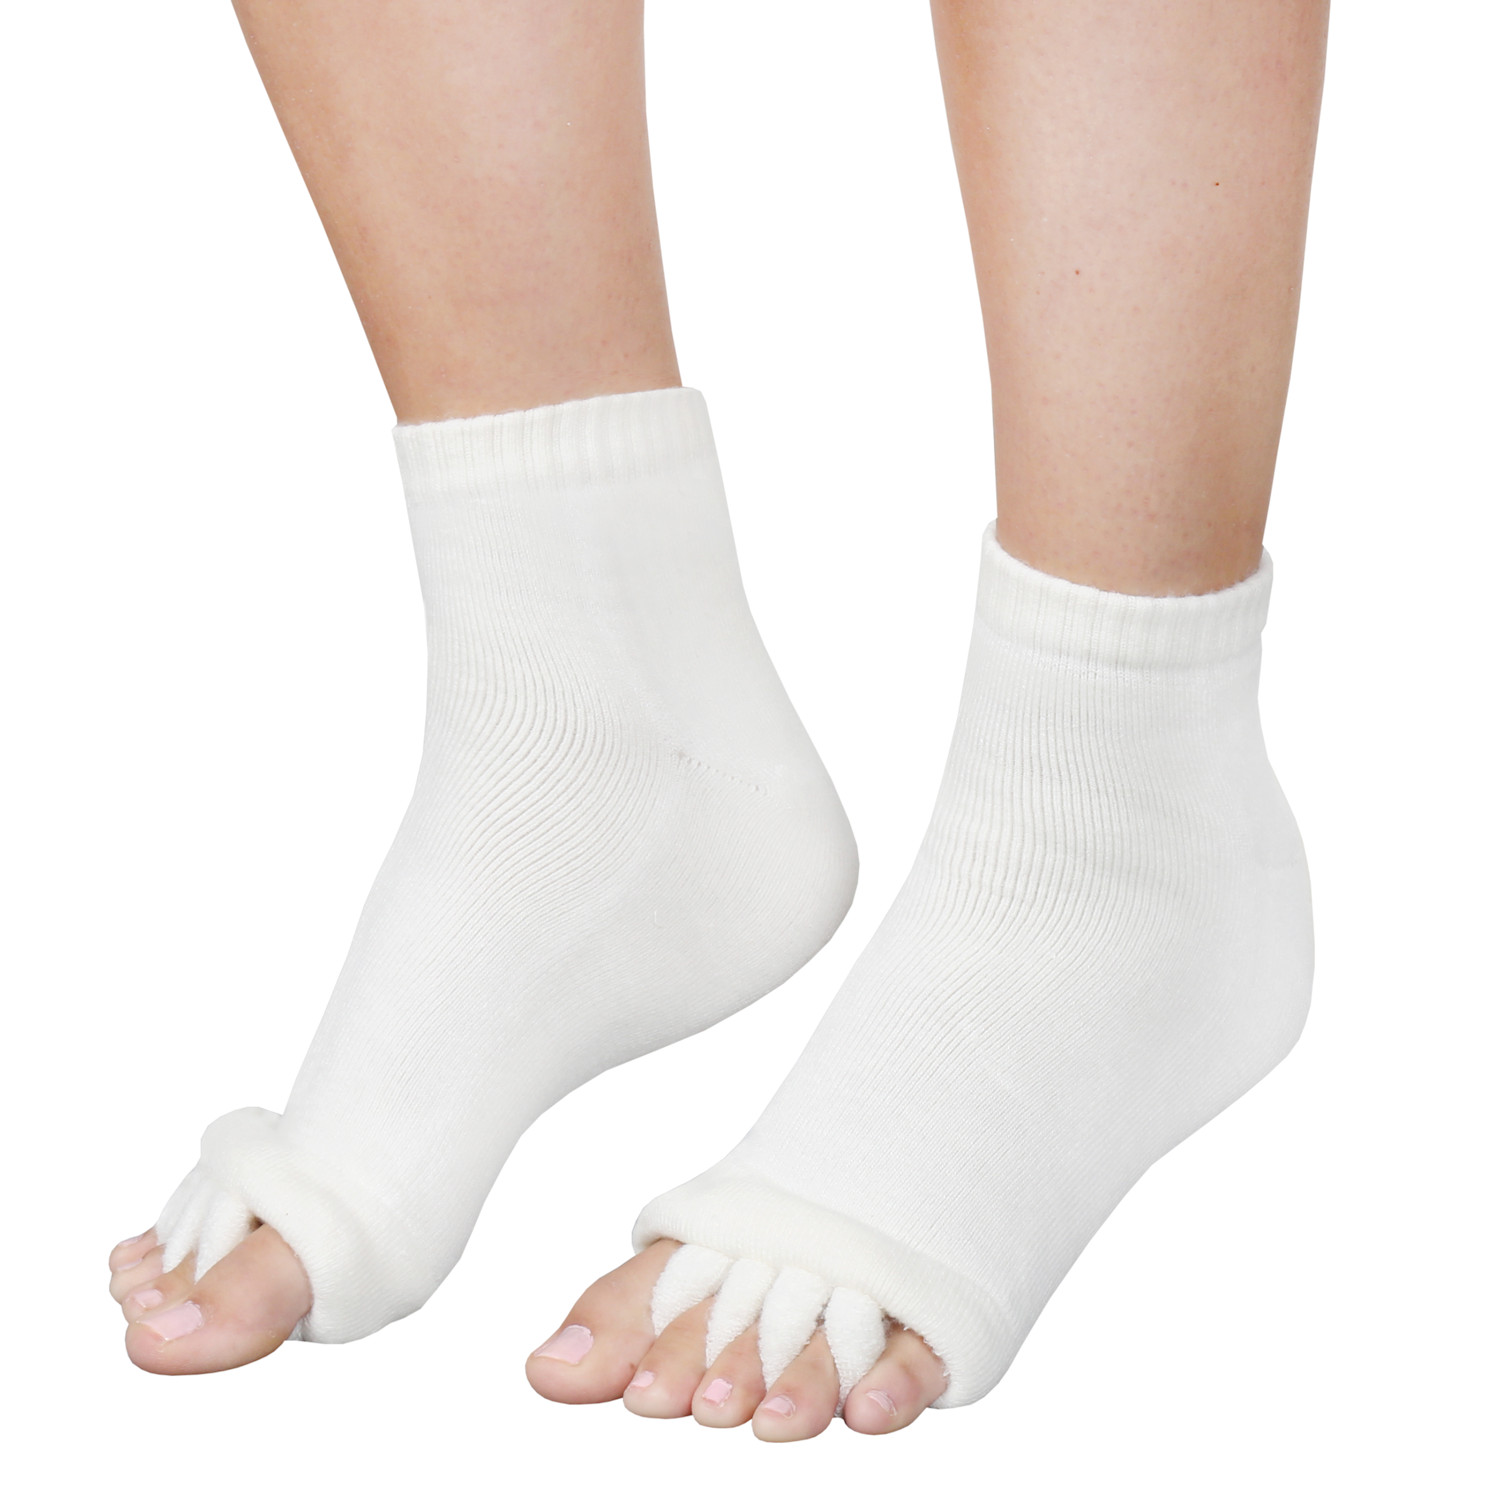 Toe Separating Gel Socks | Support Plus